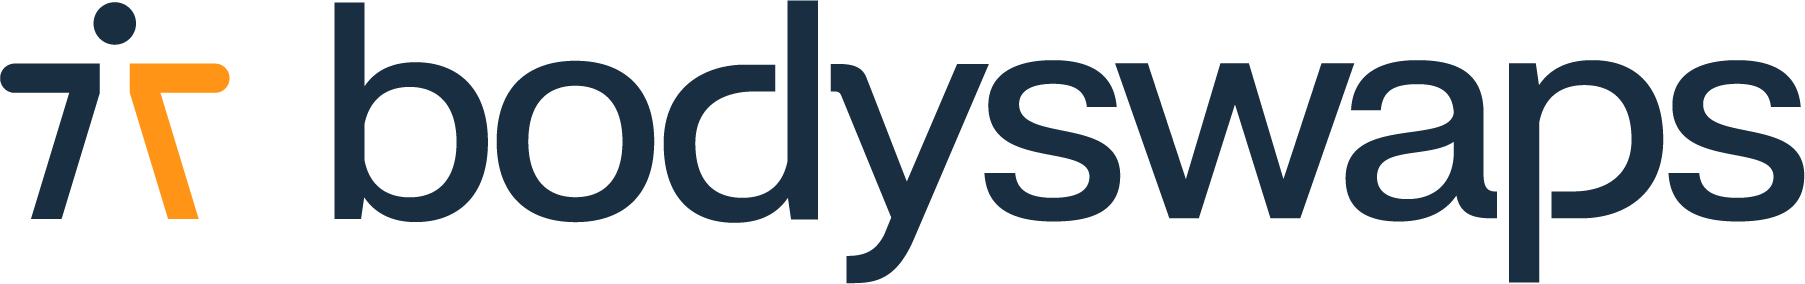 Bodysways logo